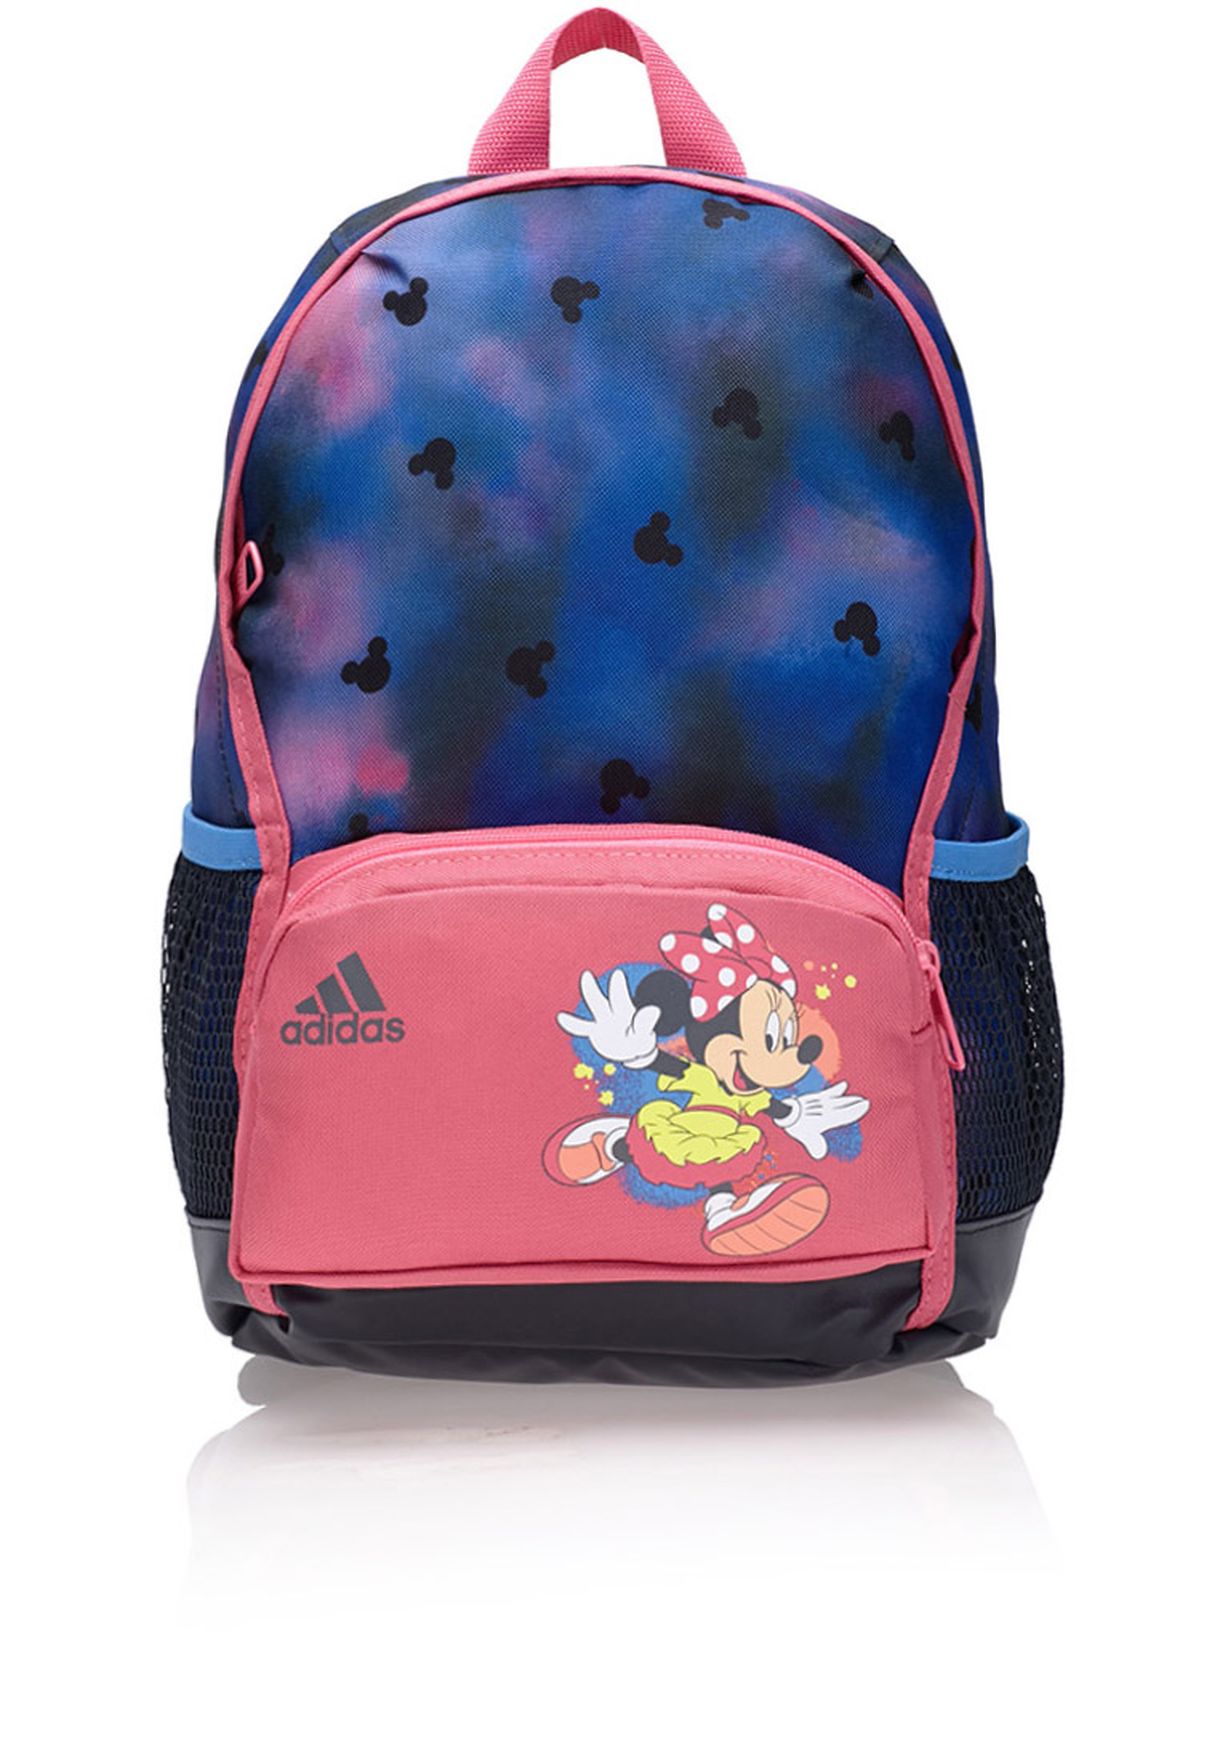 adidas disney backpack